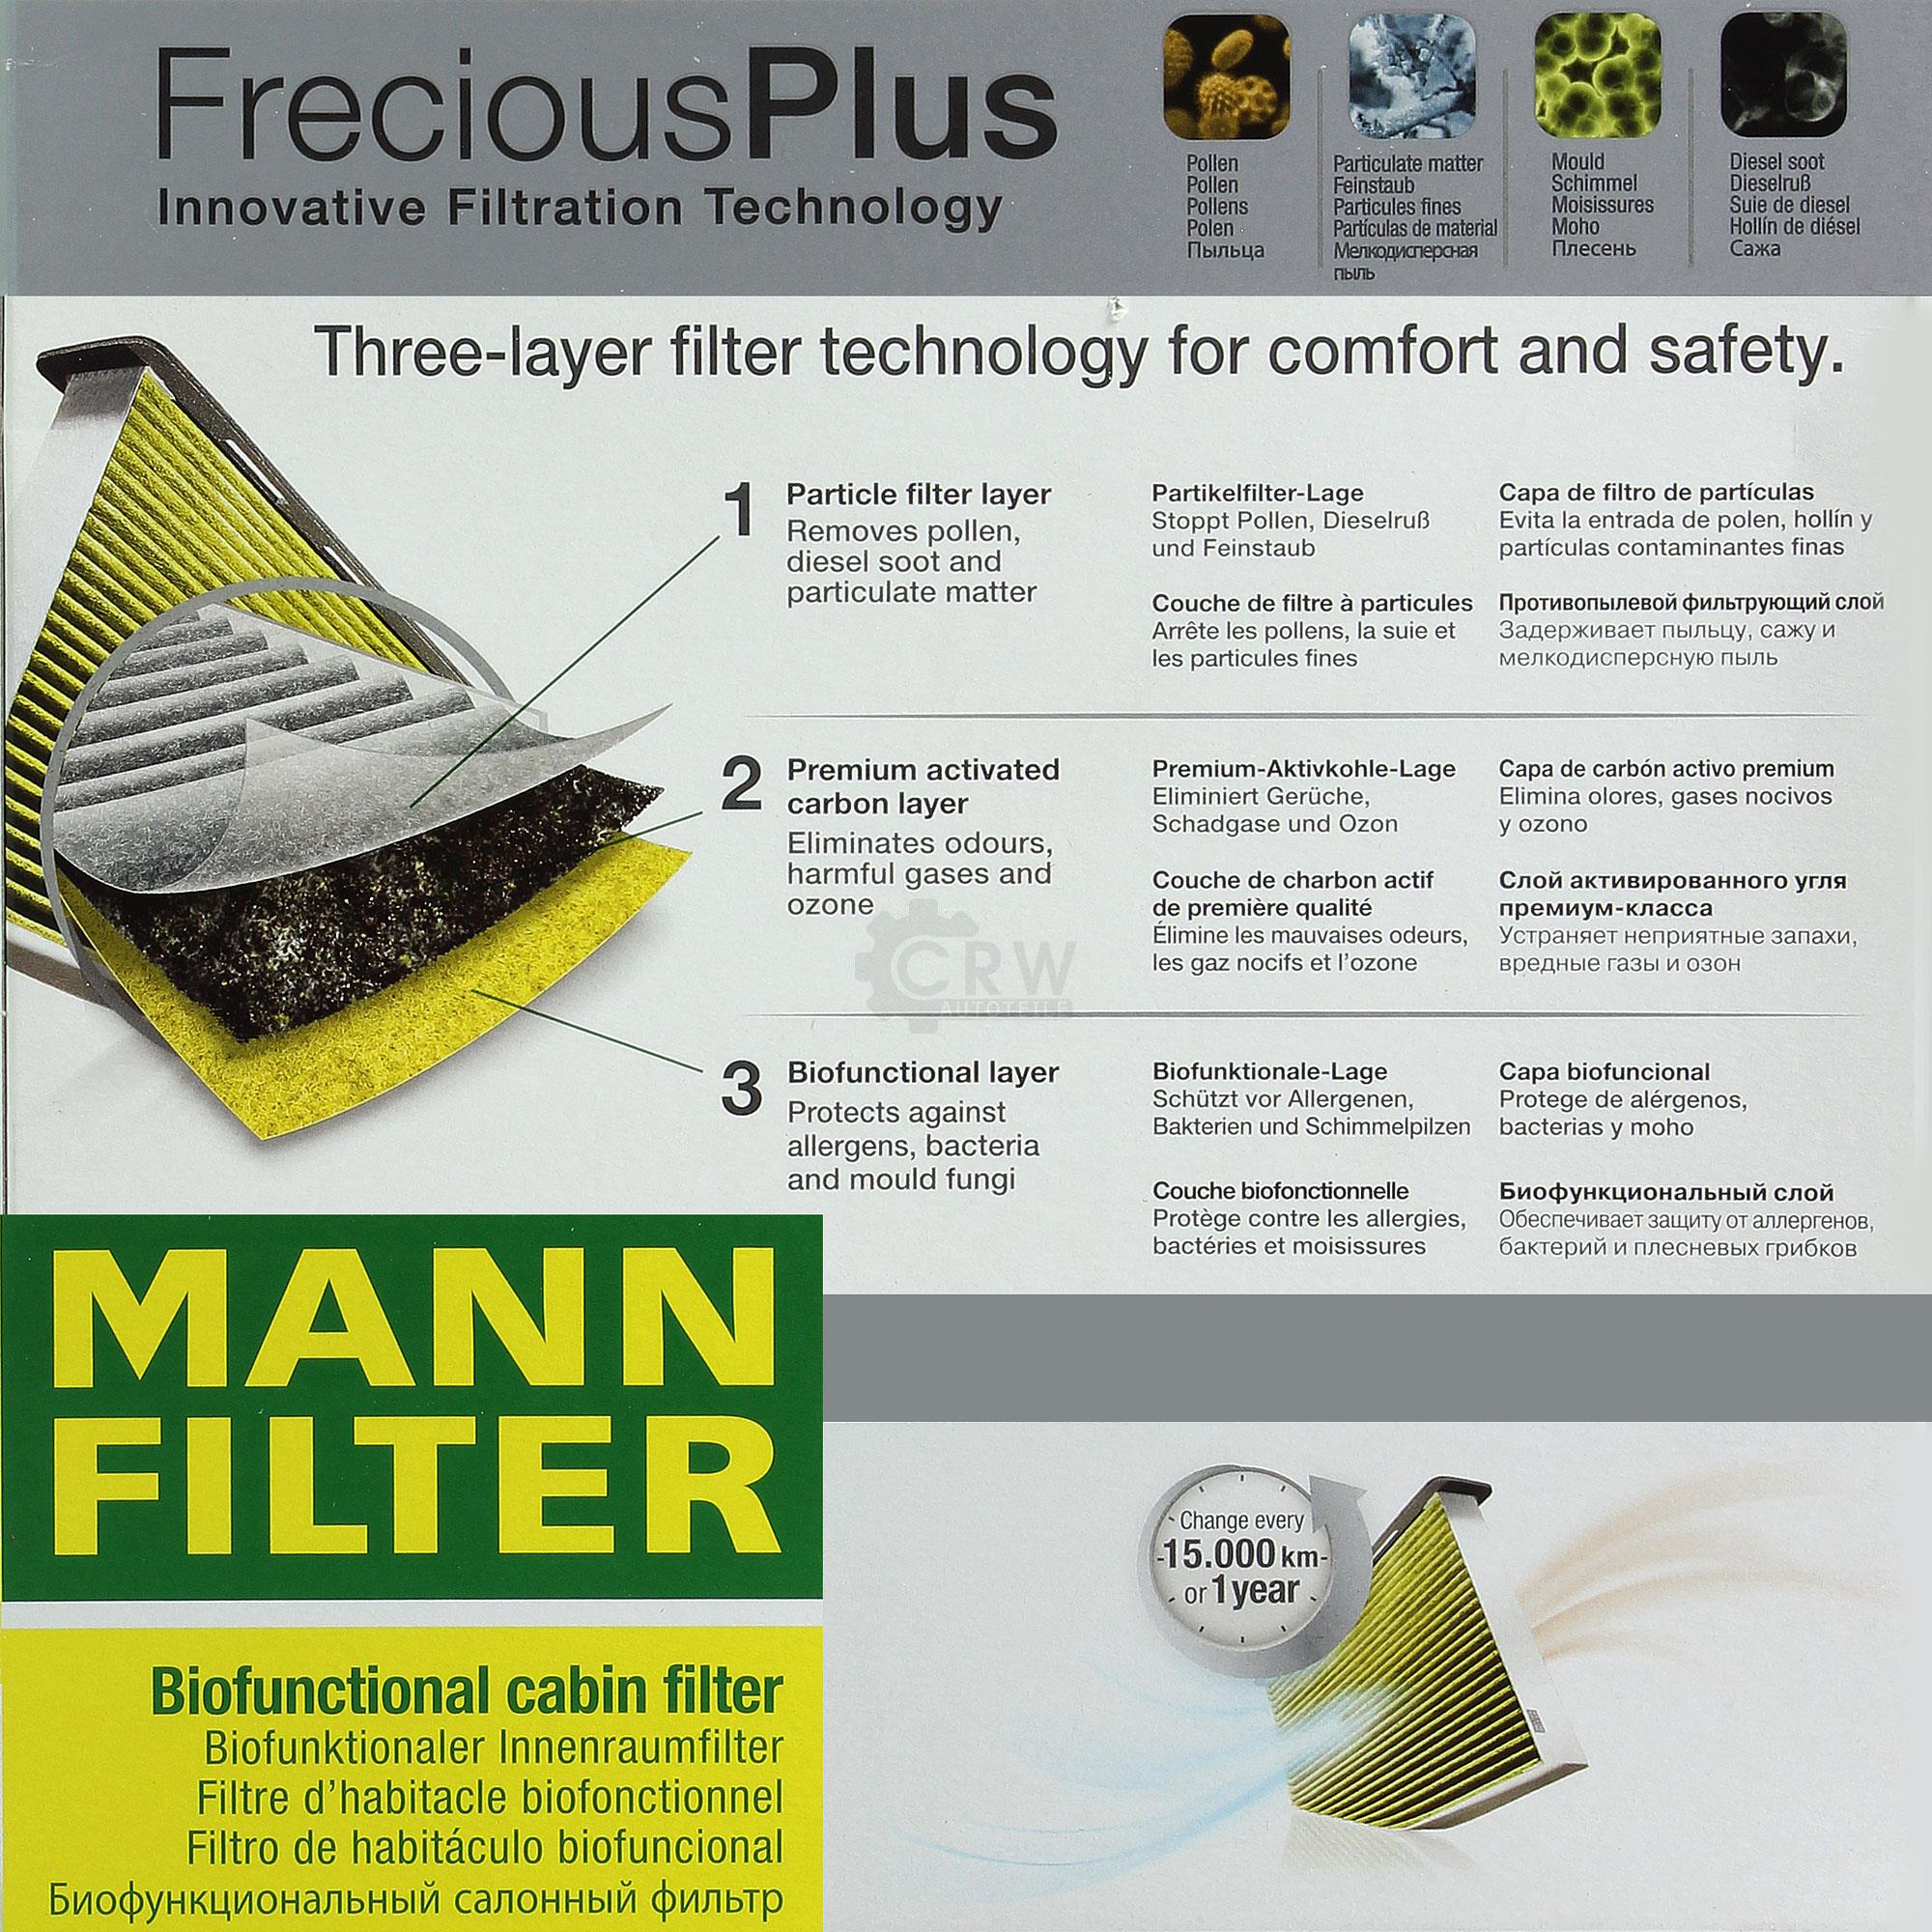 MANN-Filter Innenraumfilter Biofunctional für Allergiker FP 3567